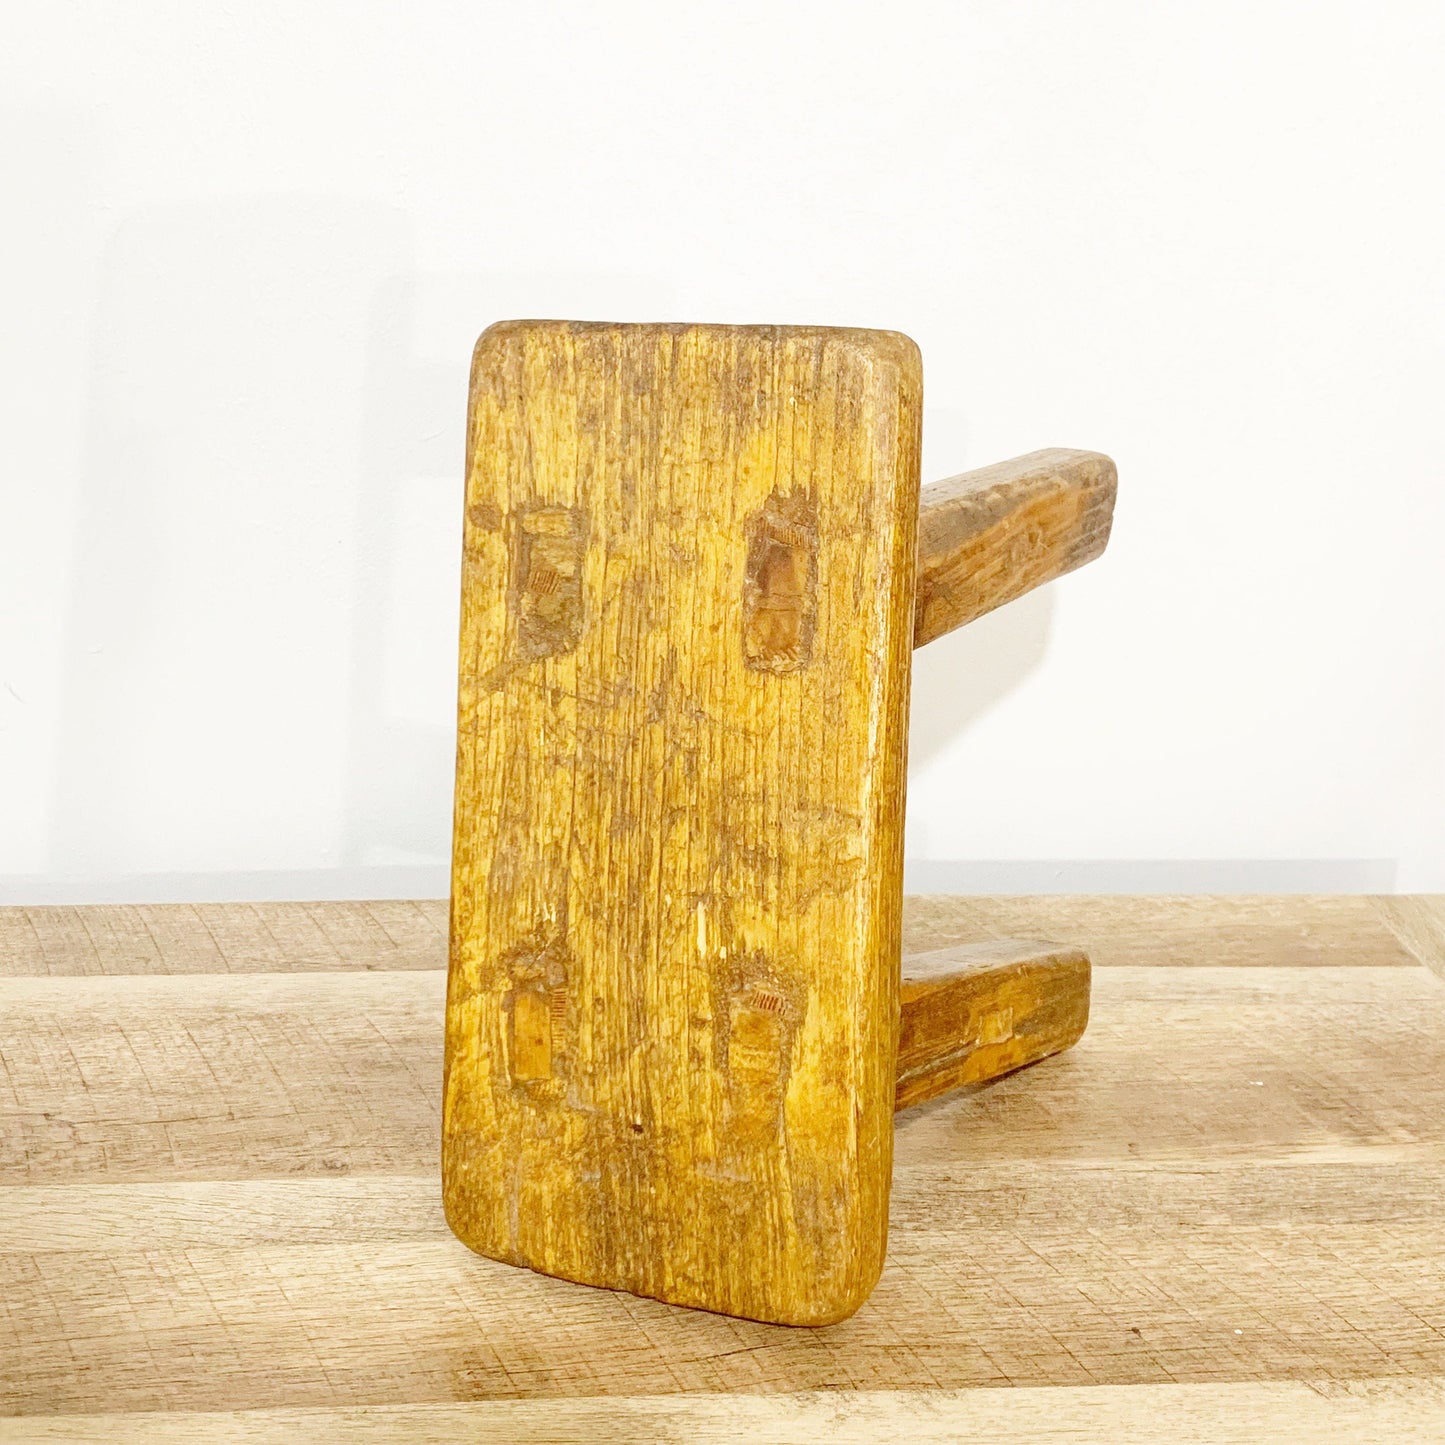 Vintage Rustic Wooden Stool | Primitive Farmhouse Wood Peg Joint Stool